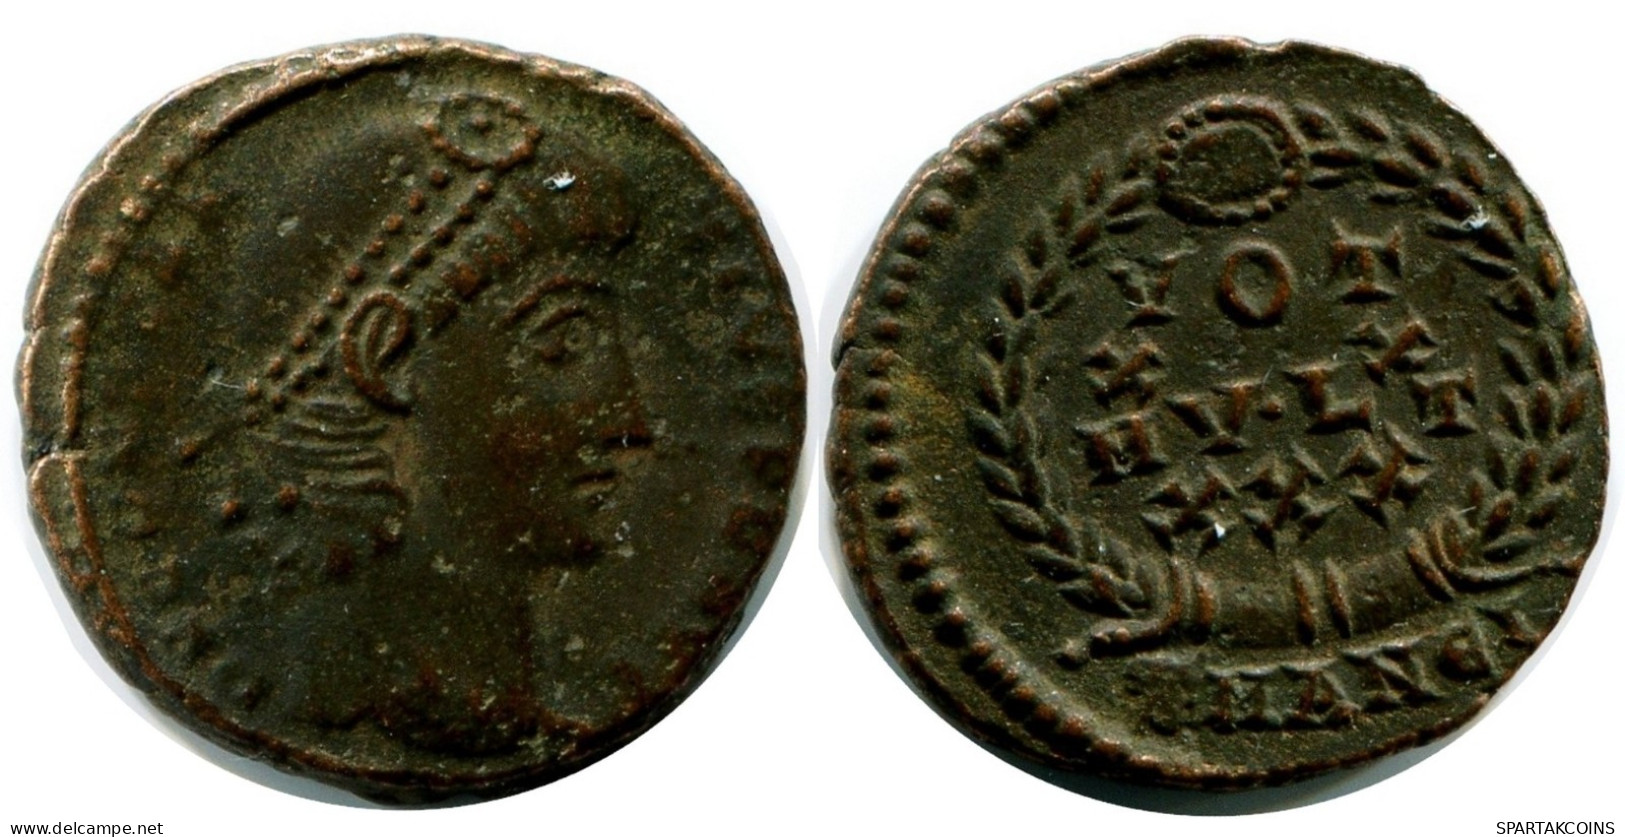 CONSTANTIUS II MINTED IN ANTIOCH FOUND IN IHNASYAH HOARD EGYPT #ANC11267.14.U.A - L'Empire Chrétien (307 à 363)